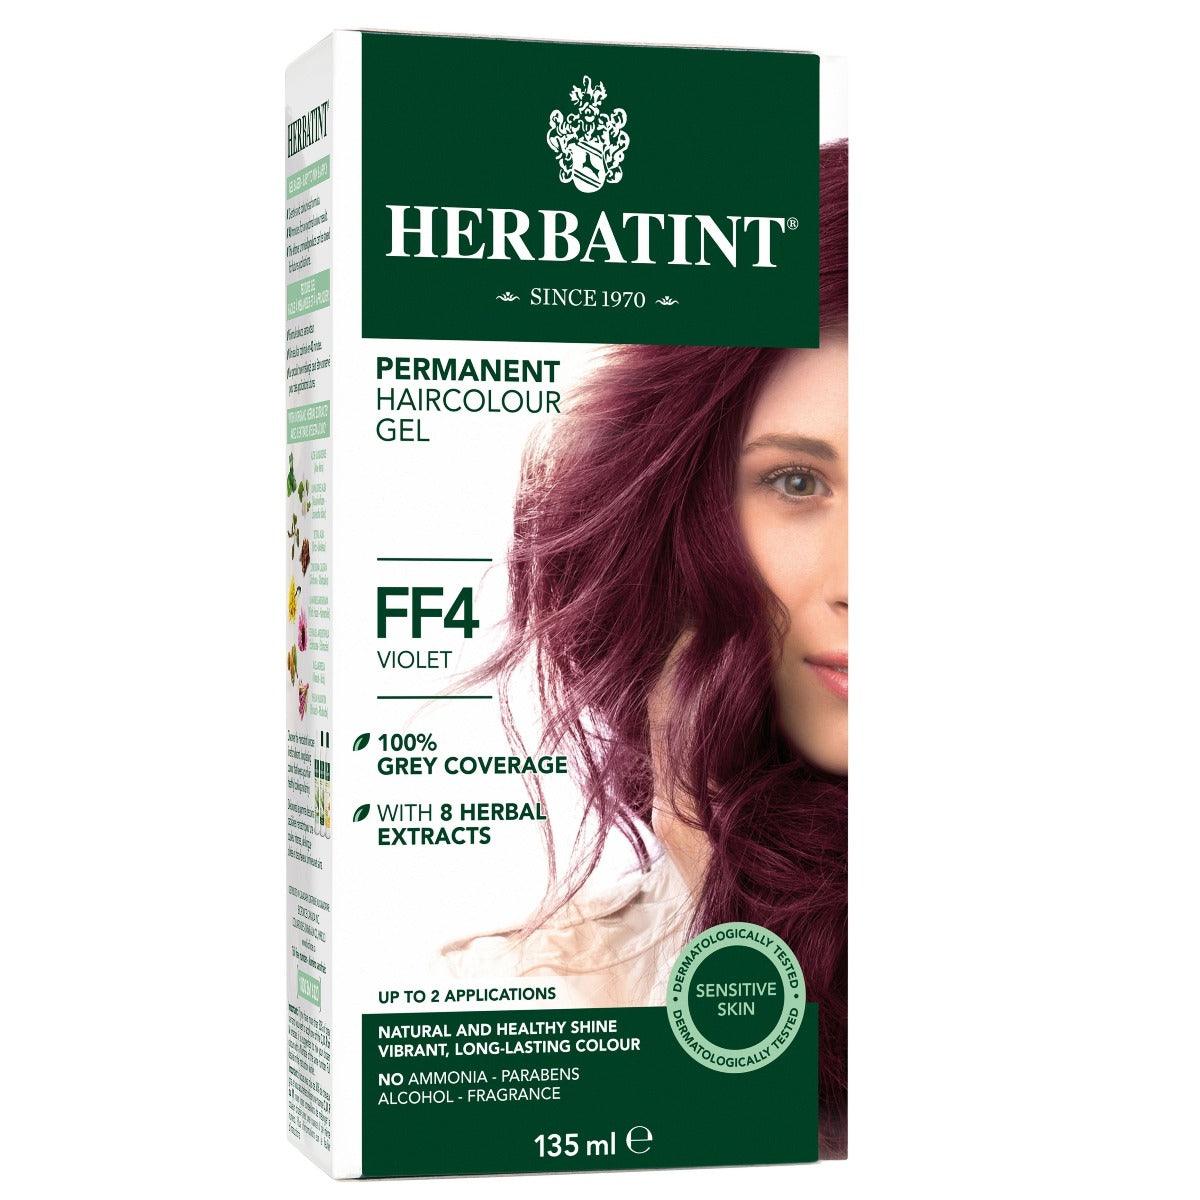 Herbatint Permanent Herbal HairColour Gel Violet FF4 Hair Colour at Village Vitamin Store